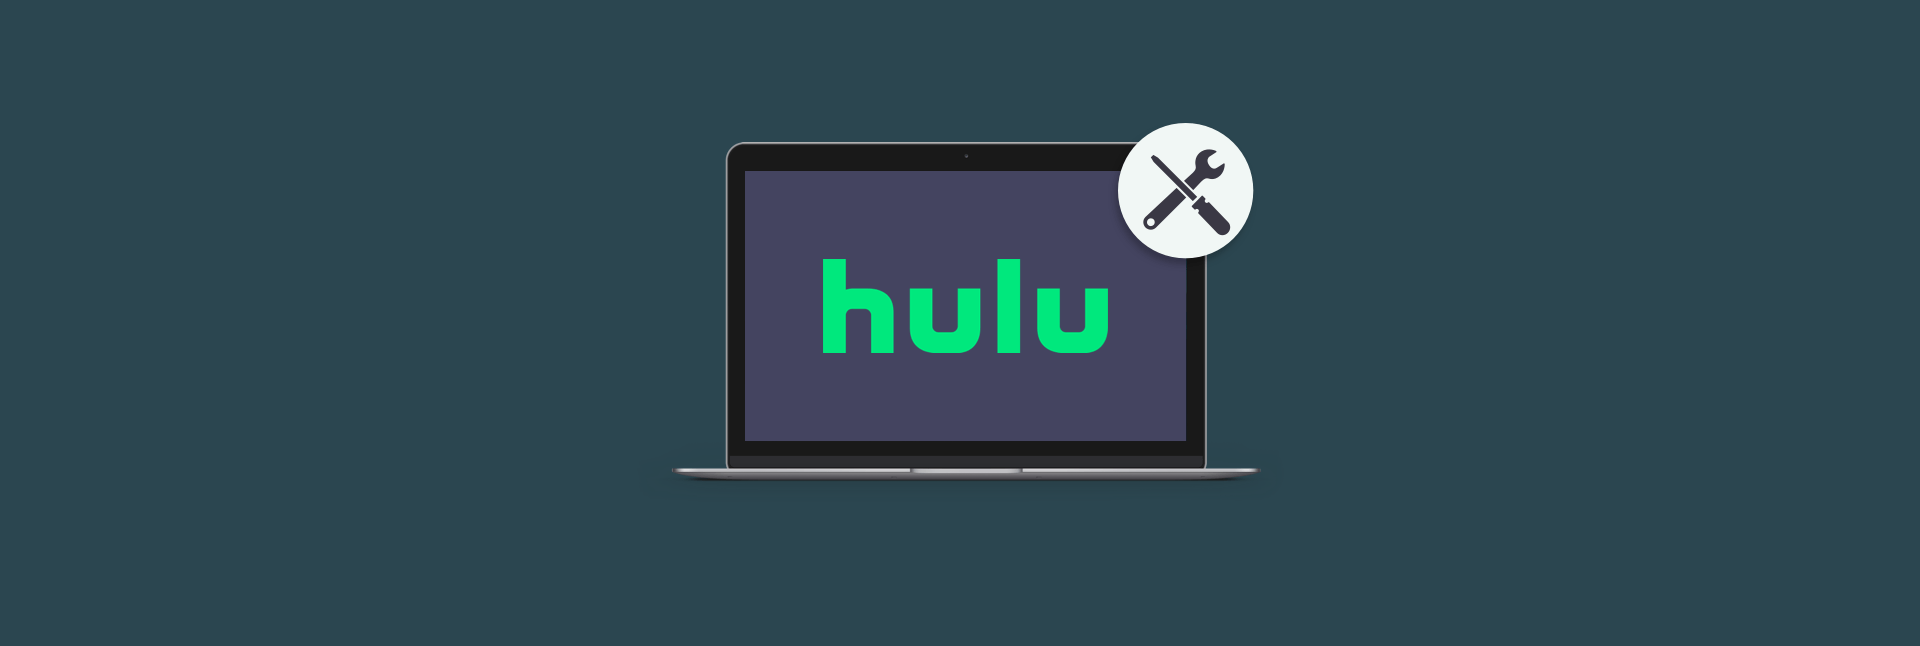 Hulu app issues - How to fix Hulu